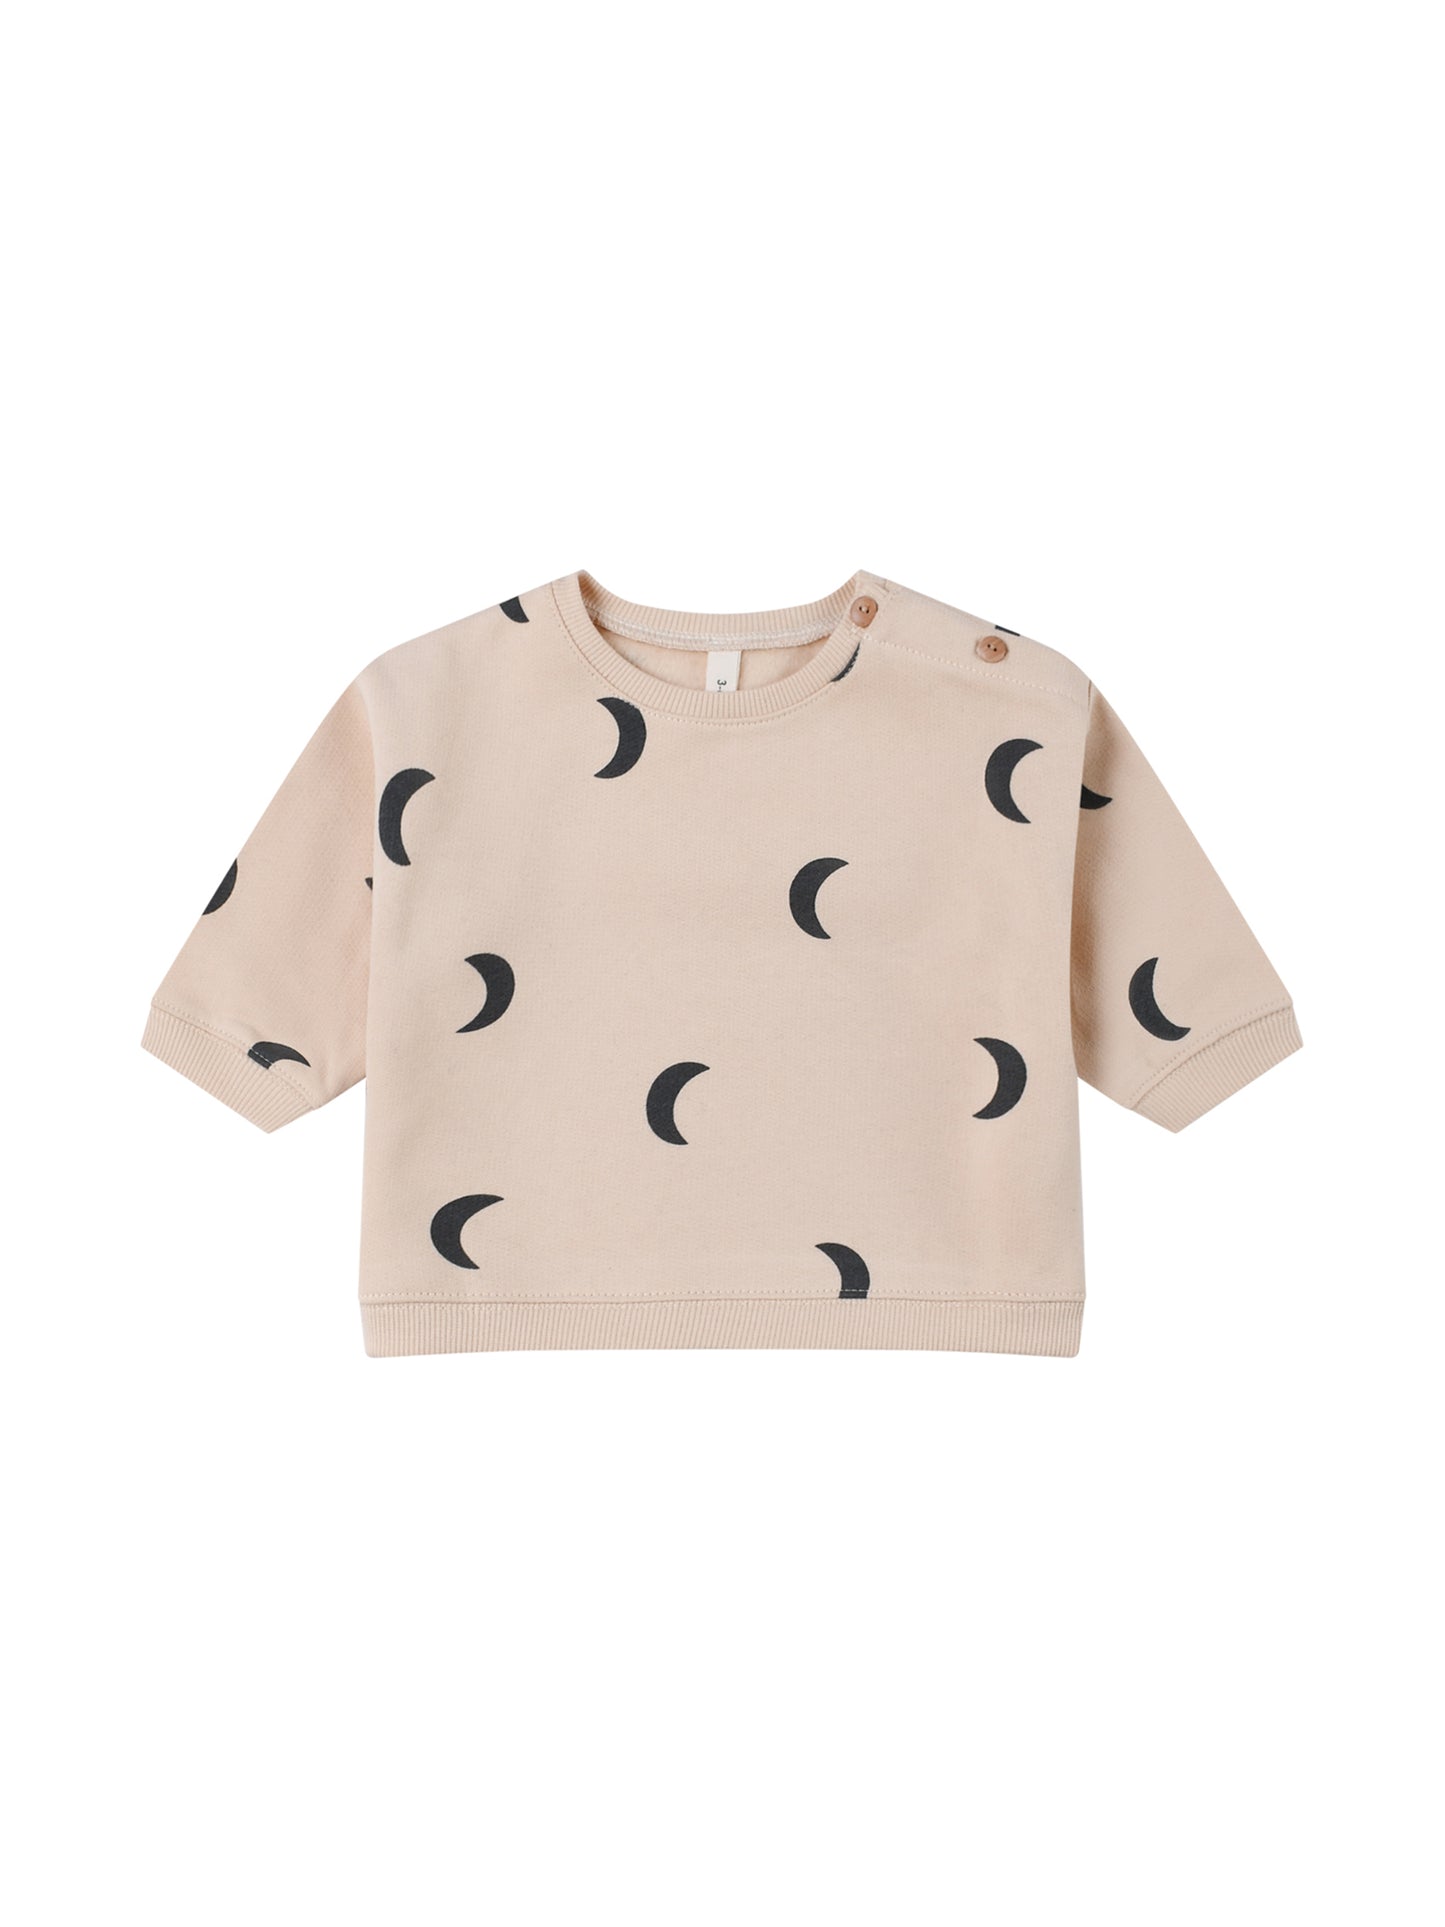 Organic Zoo - Pebble Midnight Sweatshirt